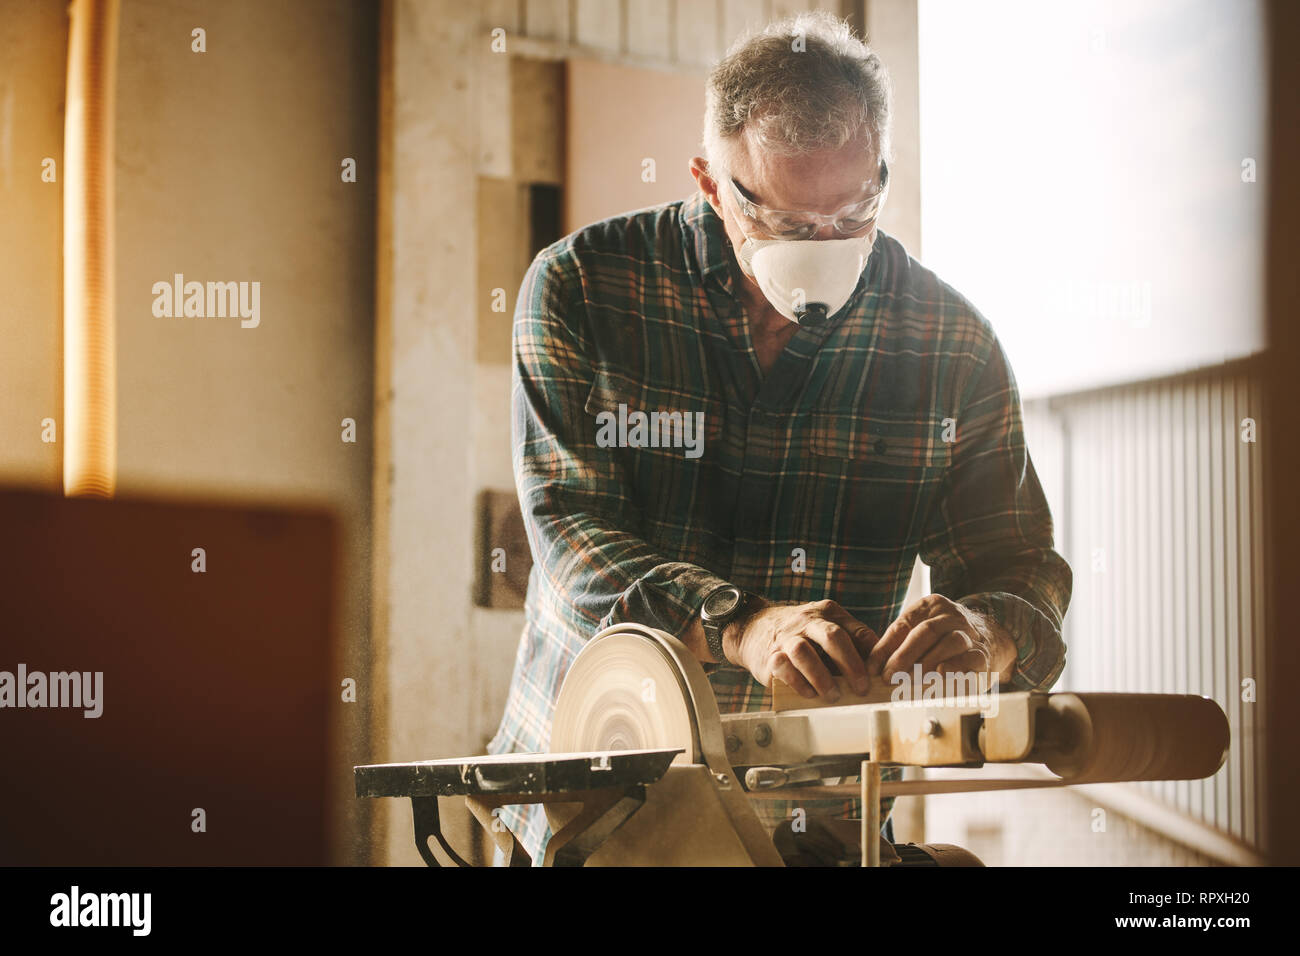 Senior carpenter sanding a wood with belt sander in carpentry workshop. Male carpenter with face mask working on belt sander machine. Stock Photo